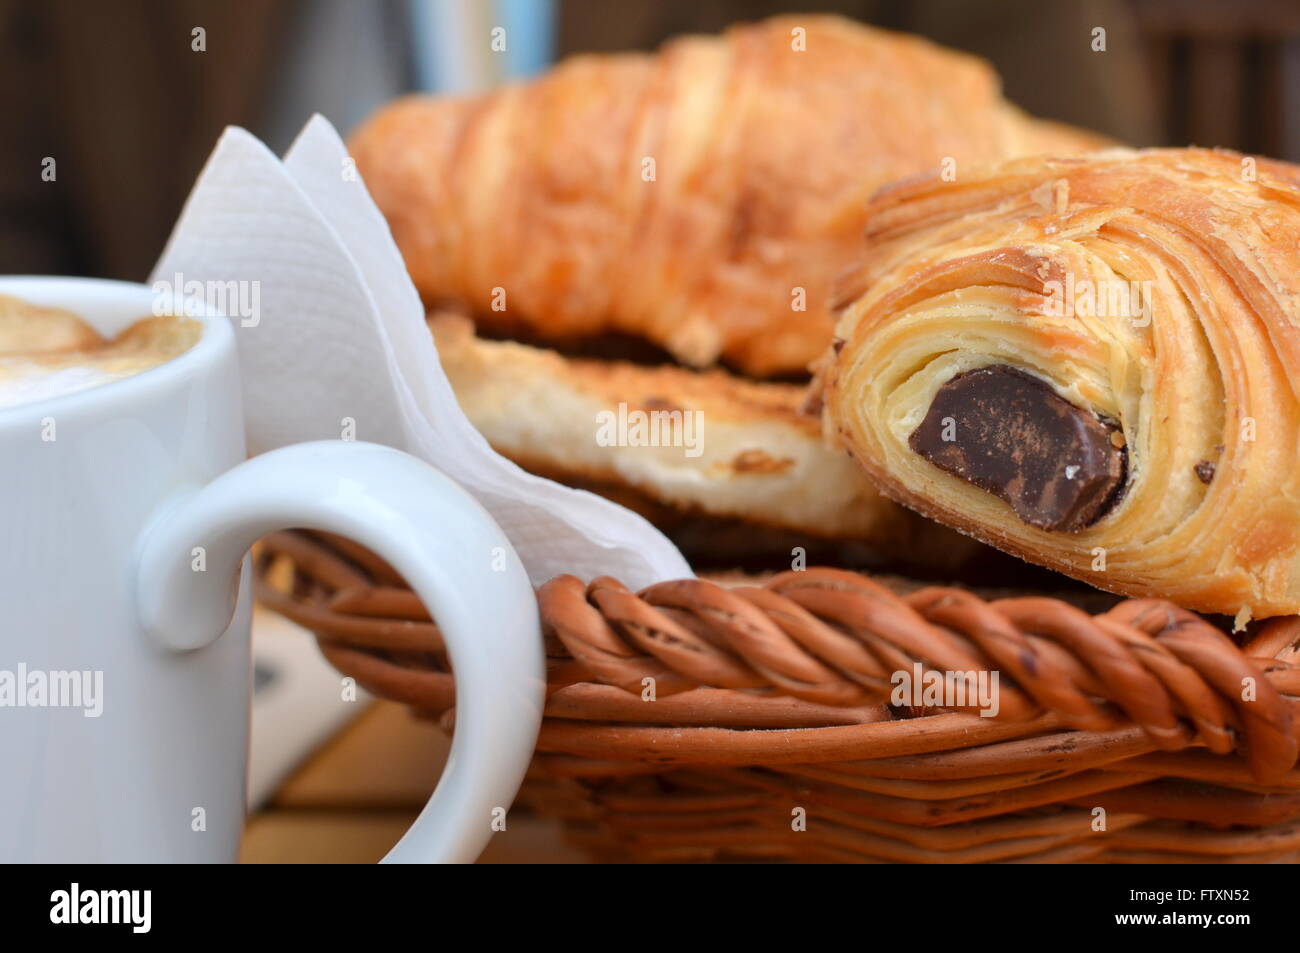 Croissant, pain au chocolat e caffè prima colazione Foto Stock